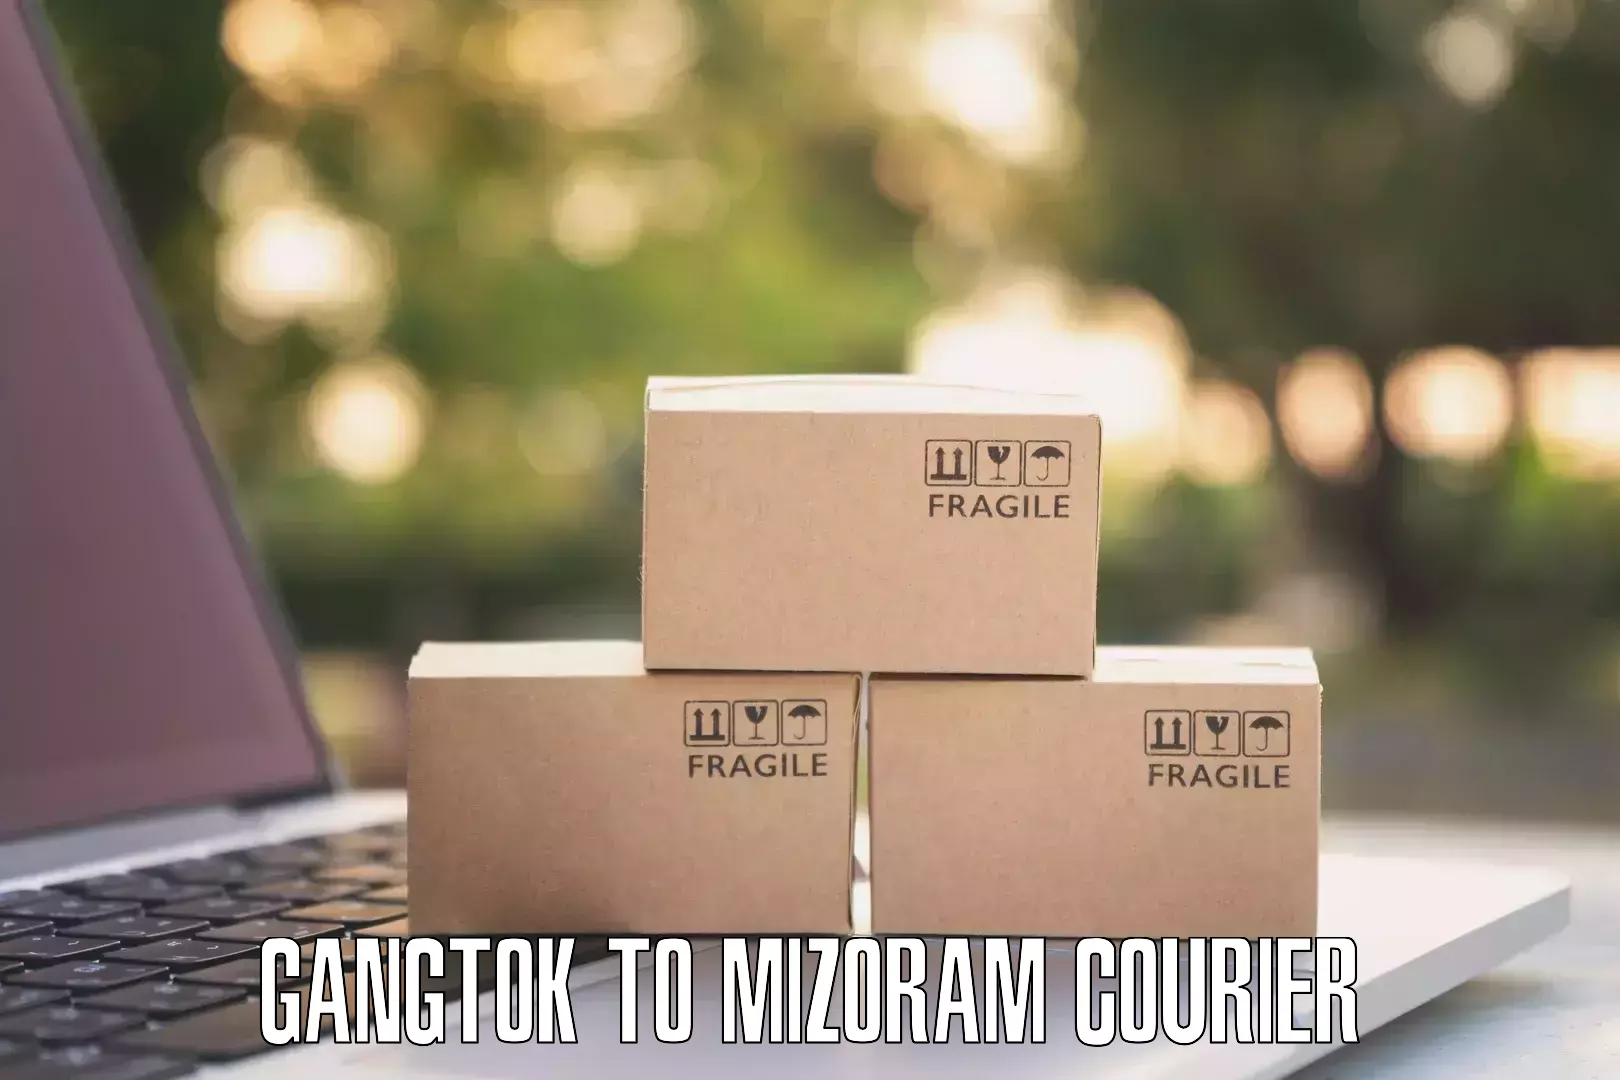 Courier service innovation Gangtok to Aizawl